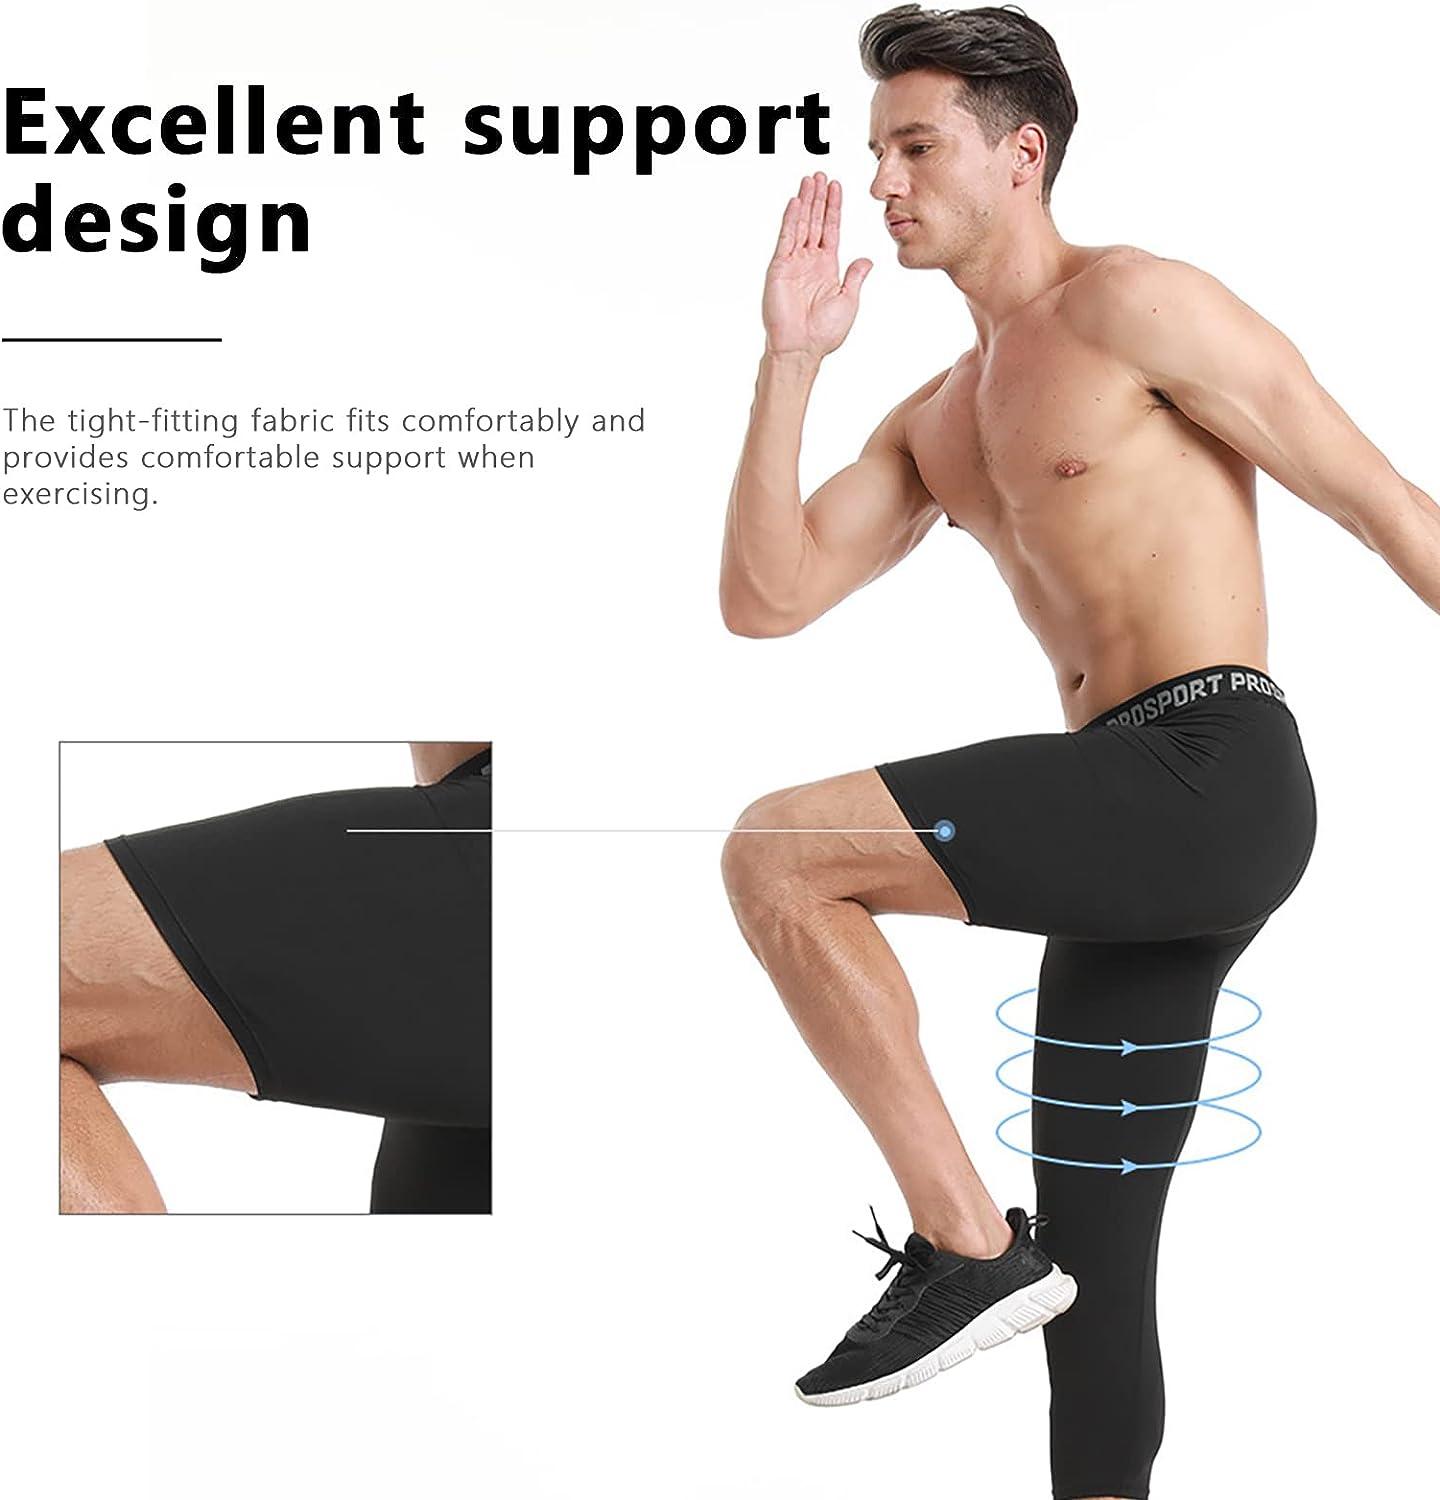 Men One Leg Compression Pants 3/4 Capri Tights Athletic Basketball Leggings  Workout Base Layer Underwear 